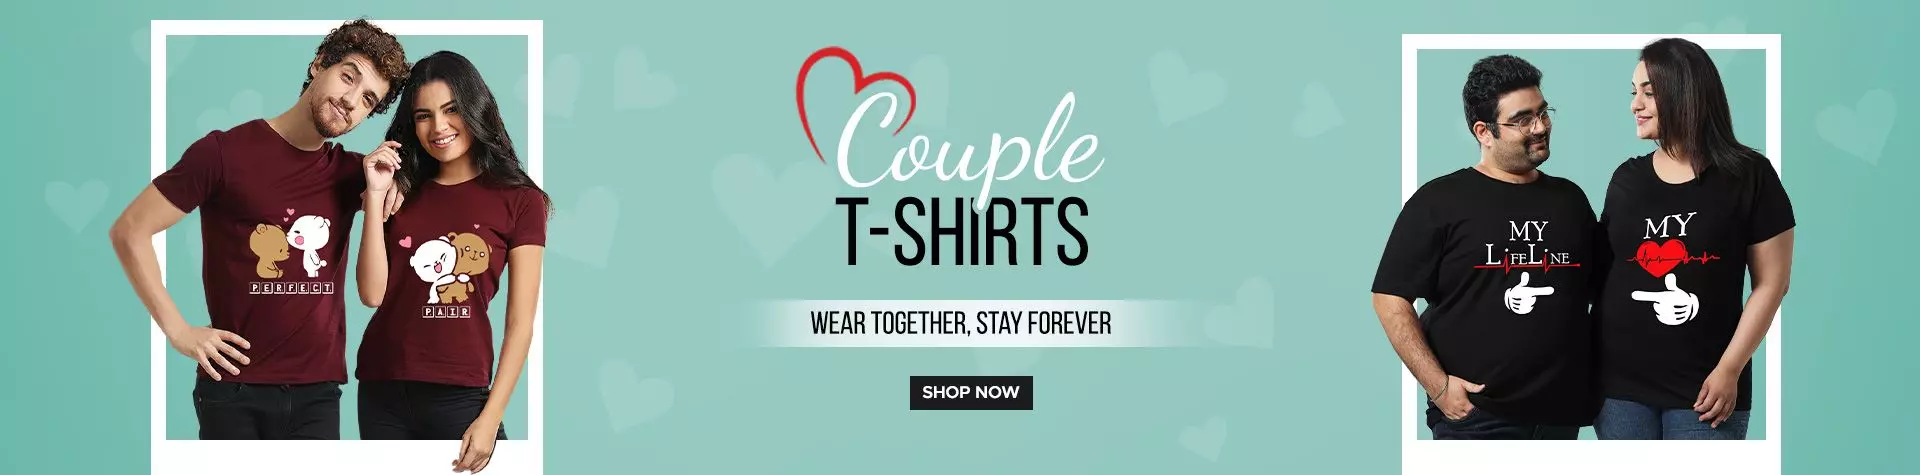 beyoung couple t shirts